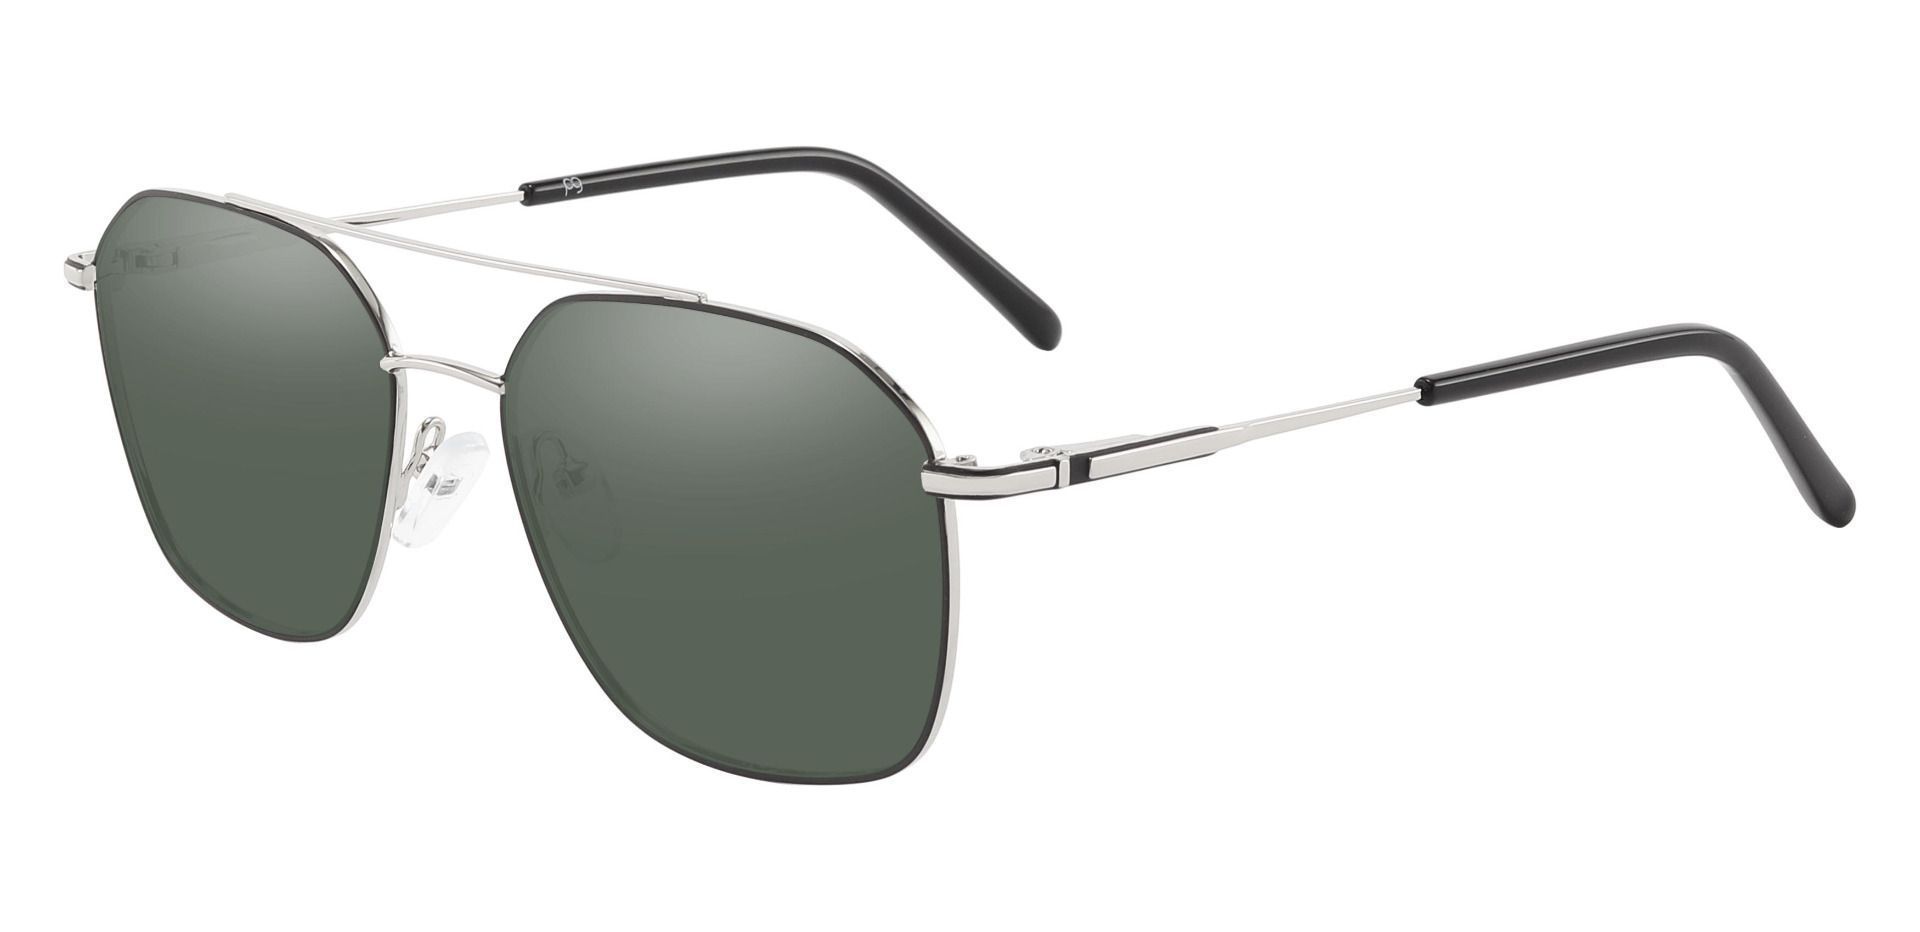 Harvey Aviator Prescription Sunglasses - Silver Frame With Green Lenses